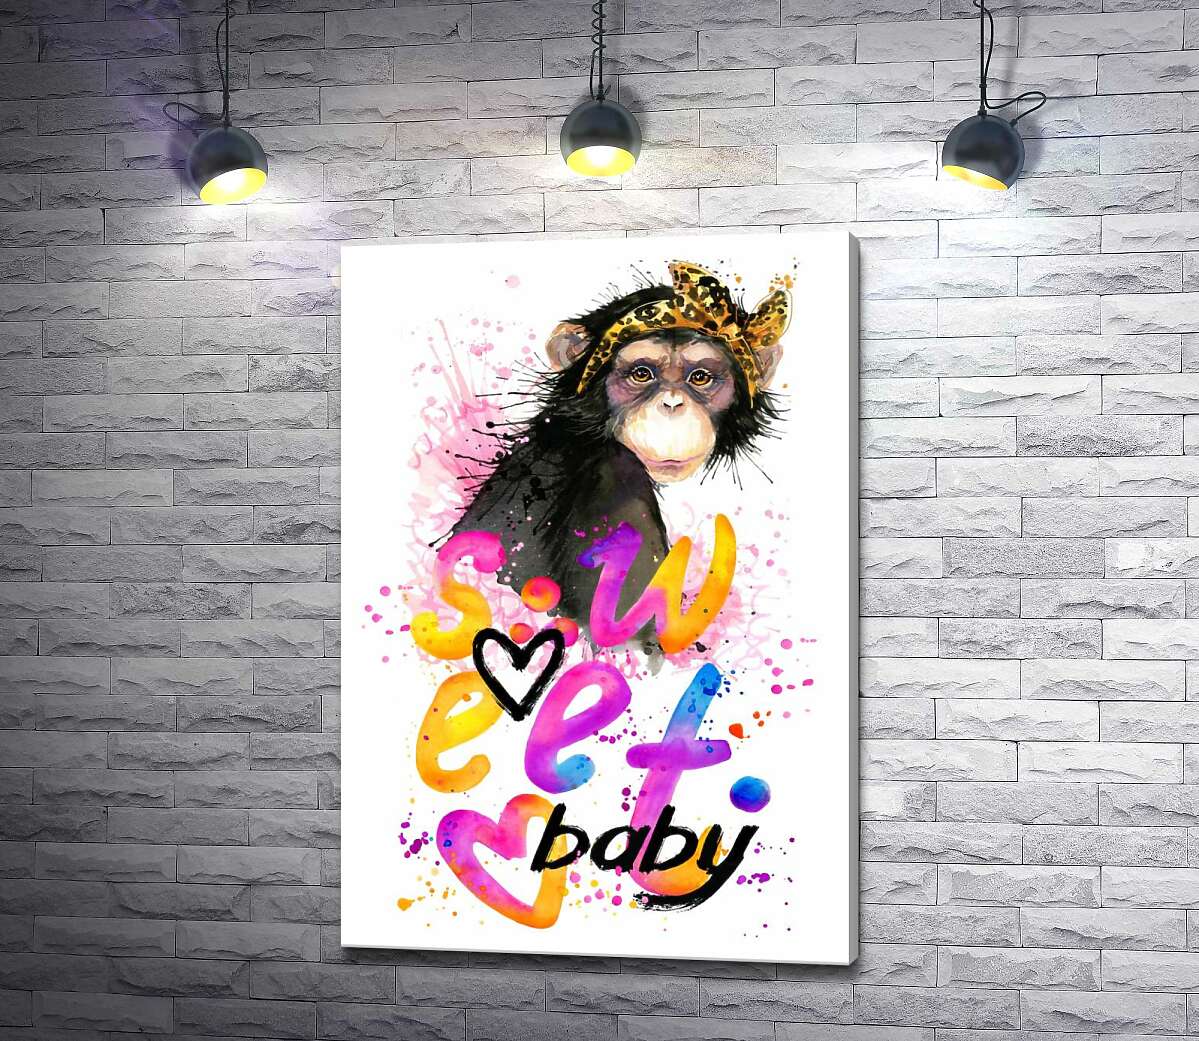 картина Модная обезьяна сидит над надписью "sweet baby"